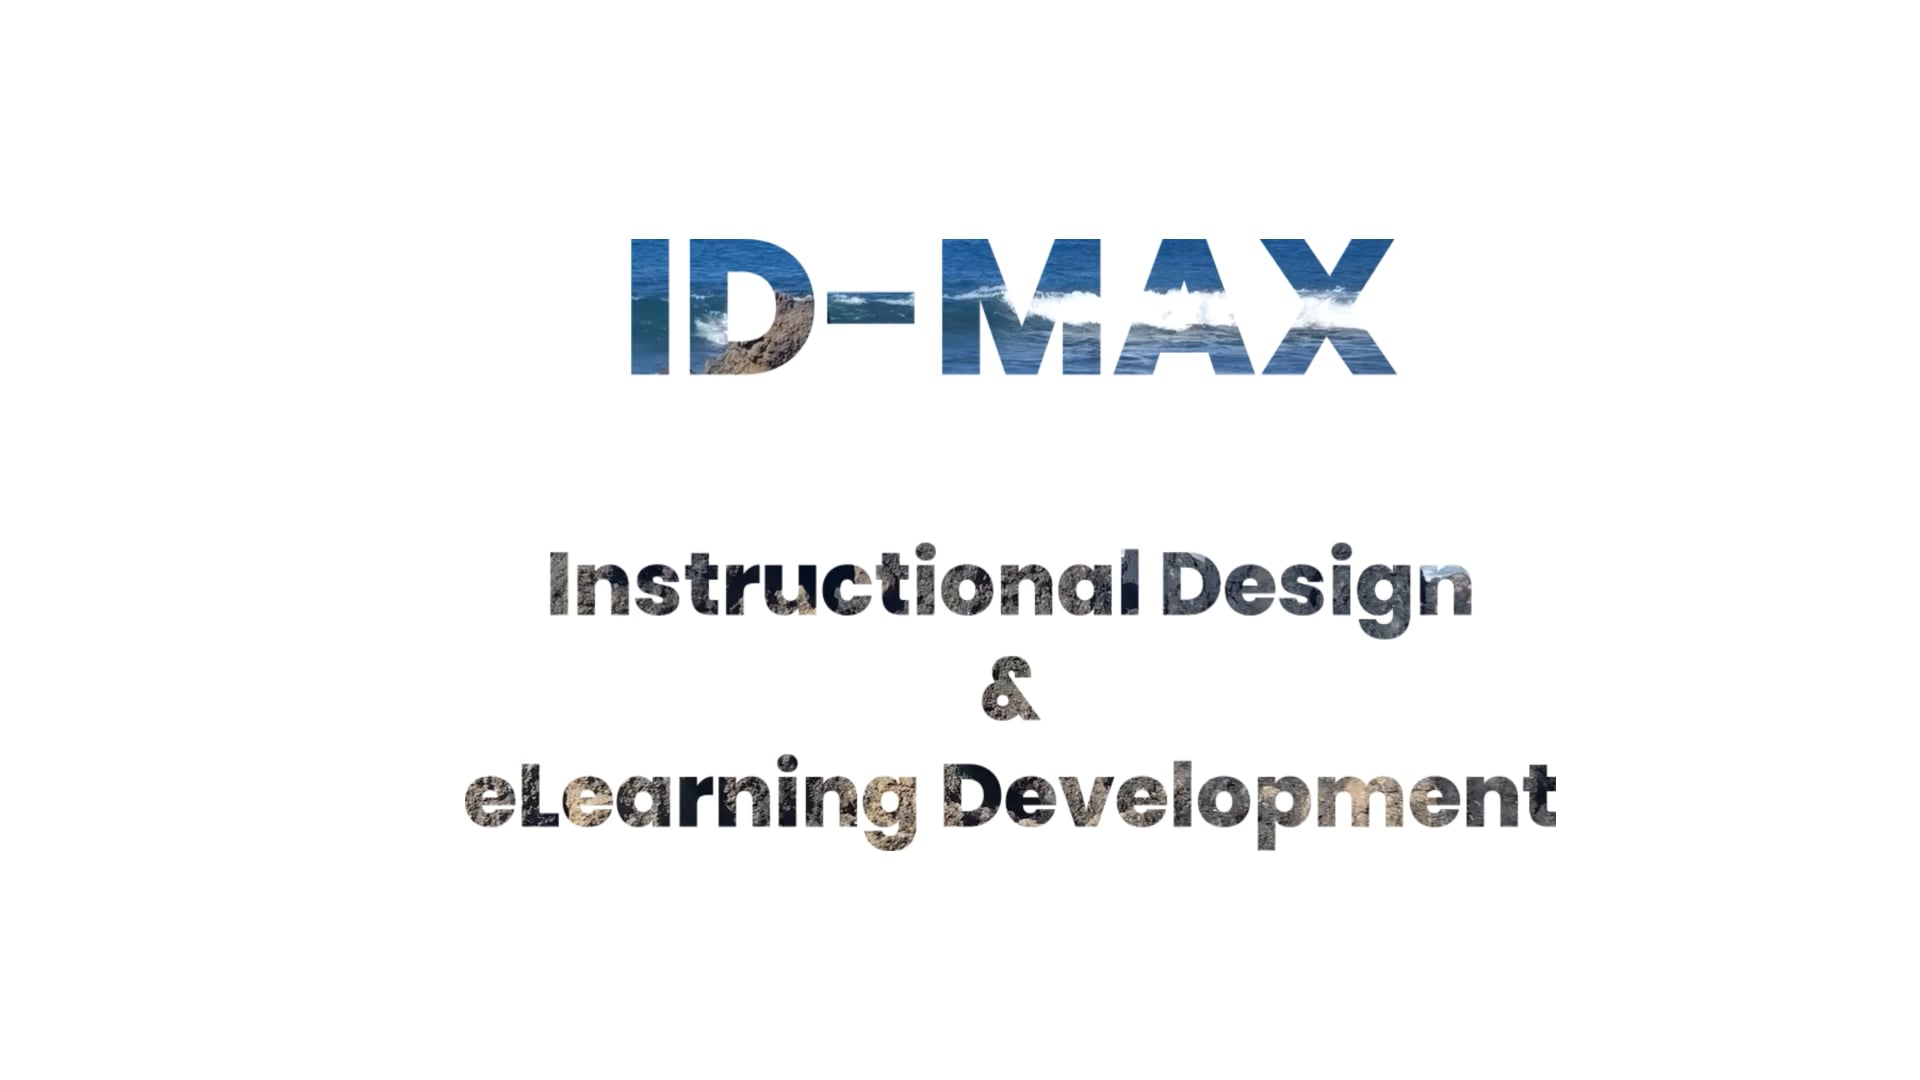 (c) Id-max.com